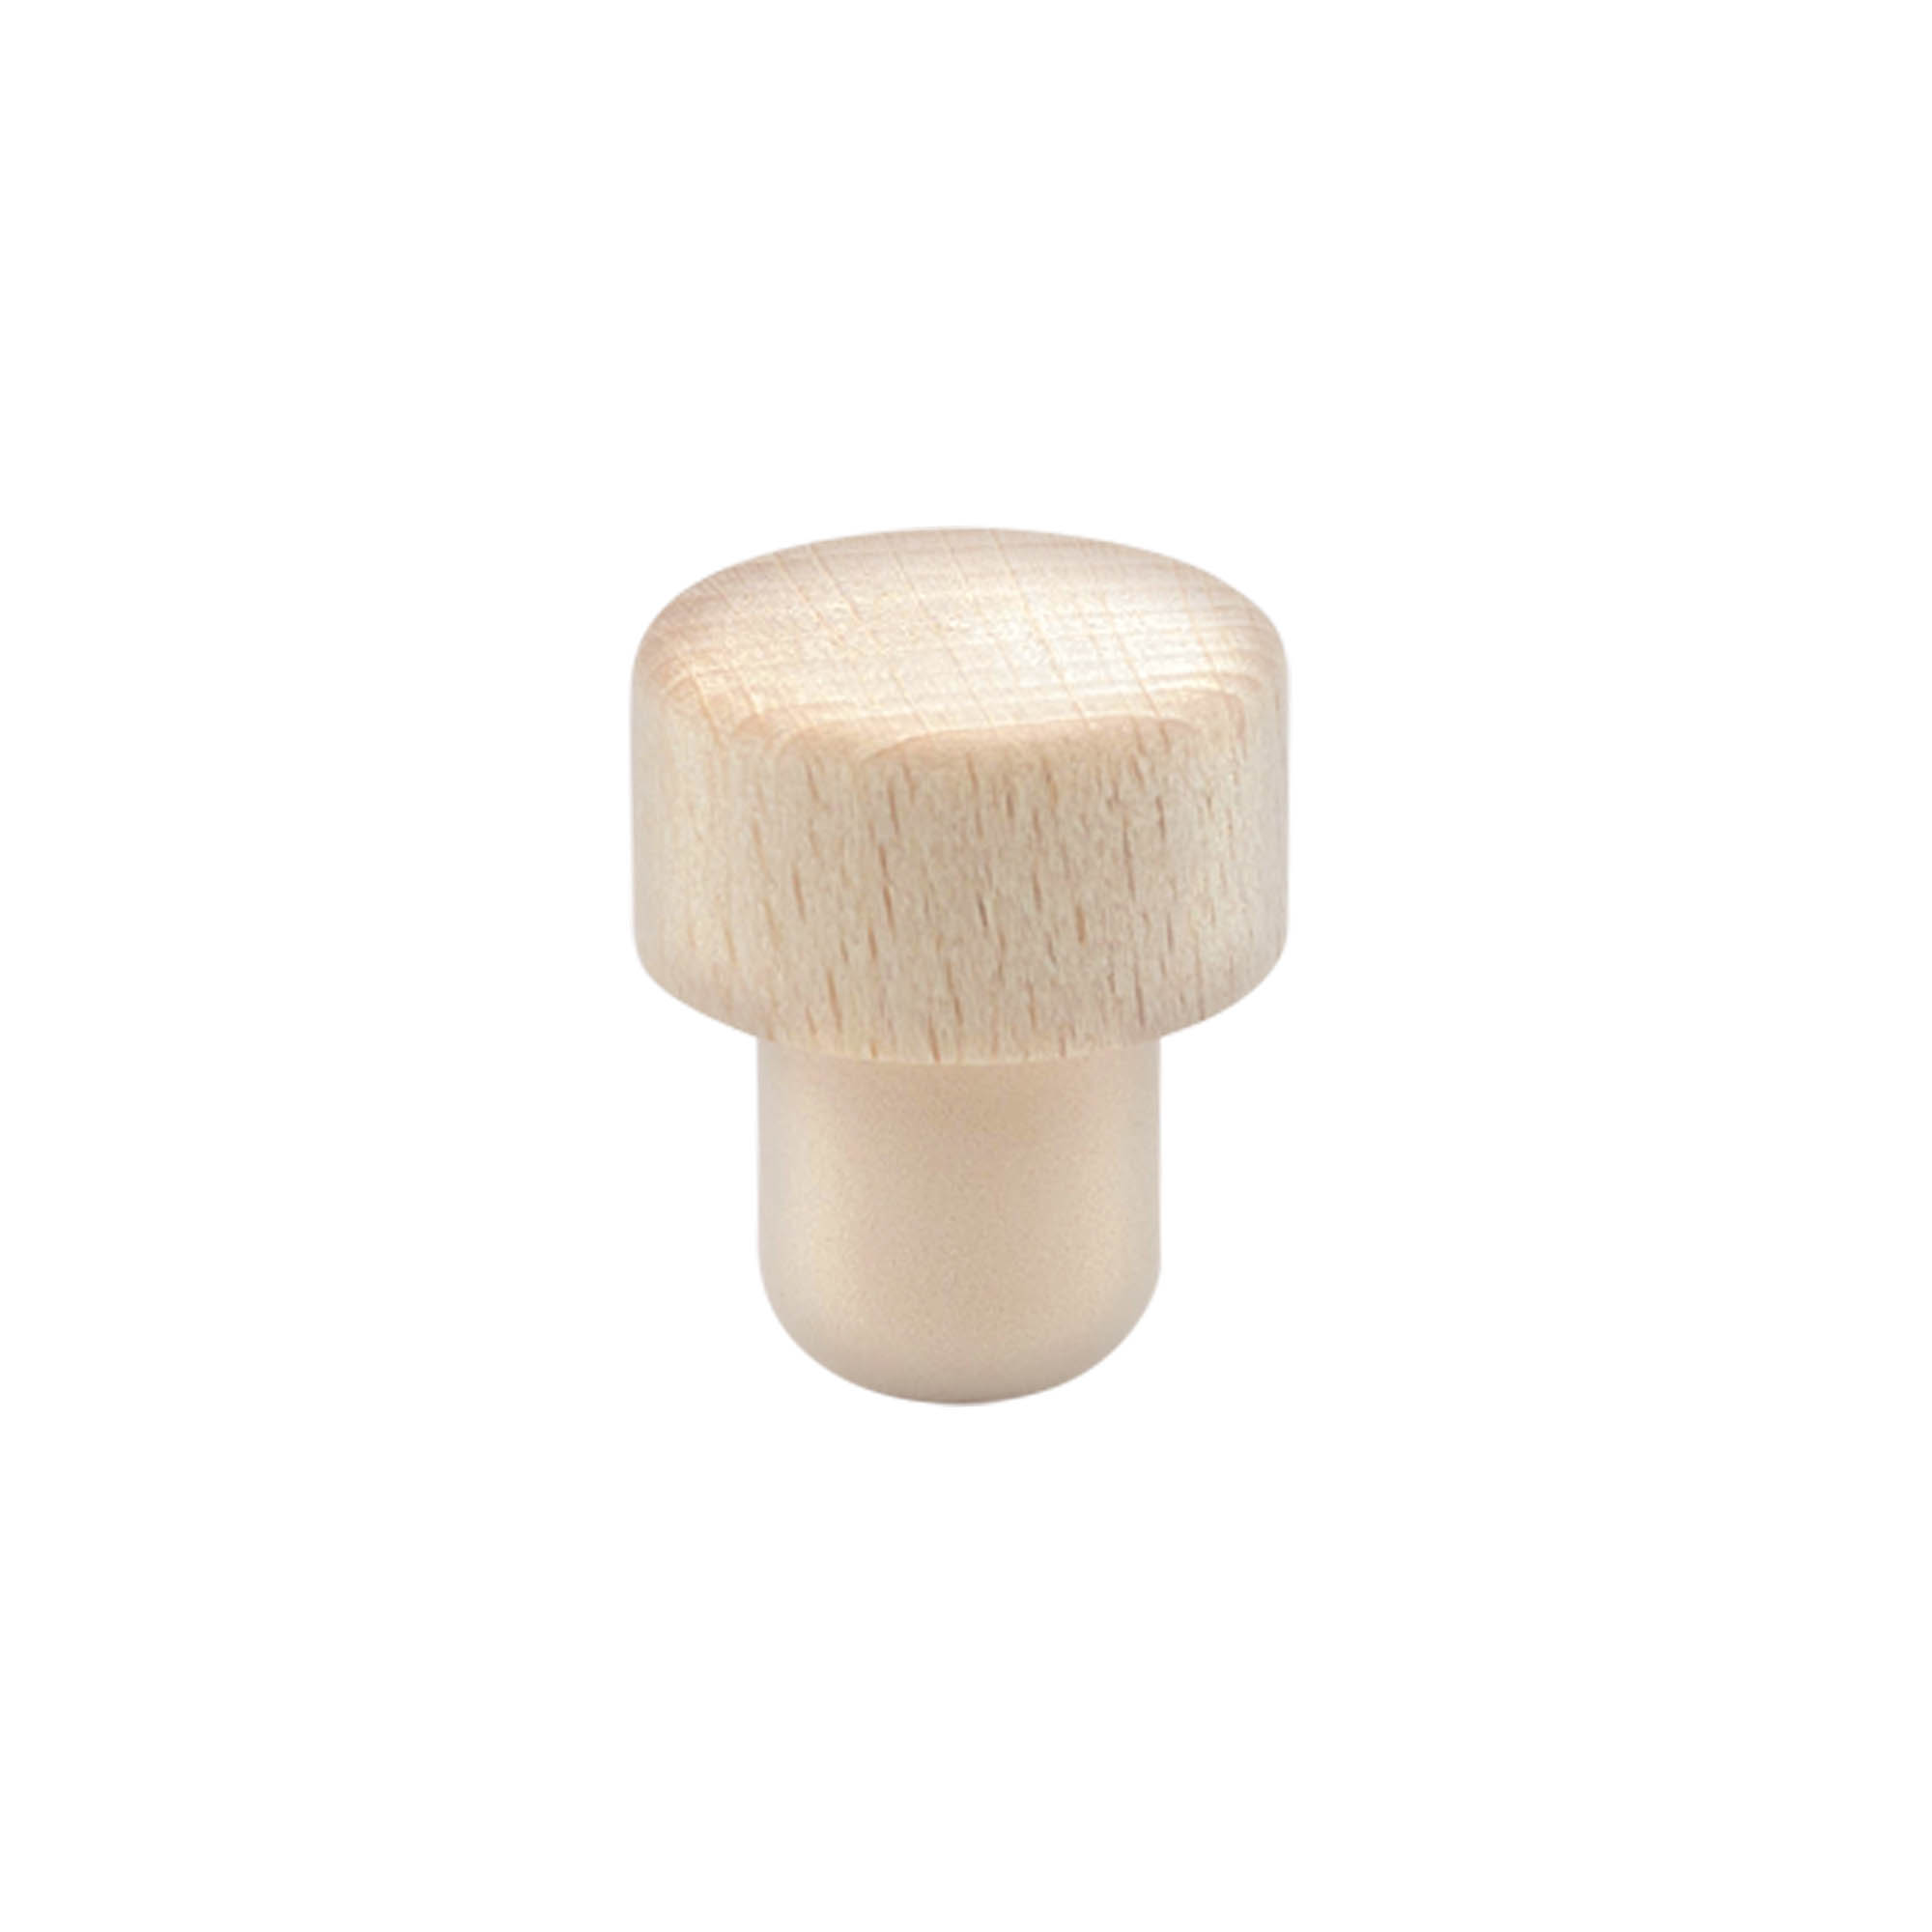 18 mm mushroom cork, wood, for opening: cork